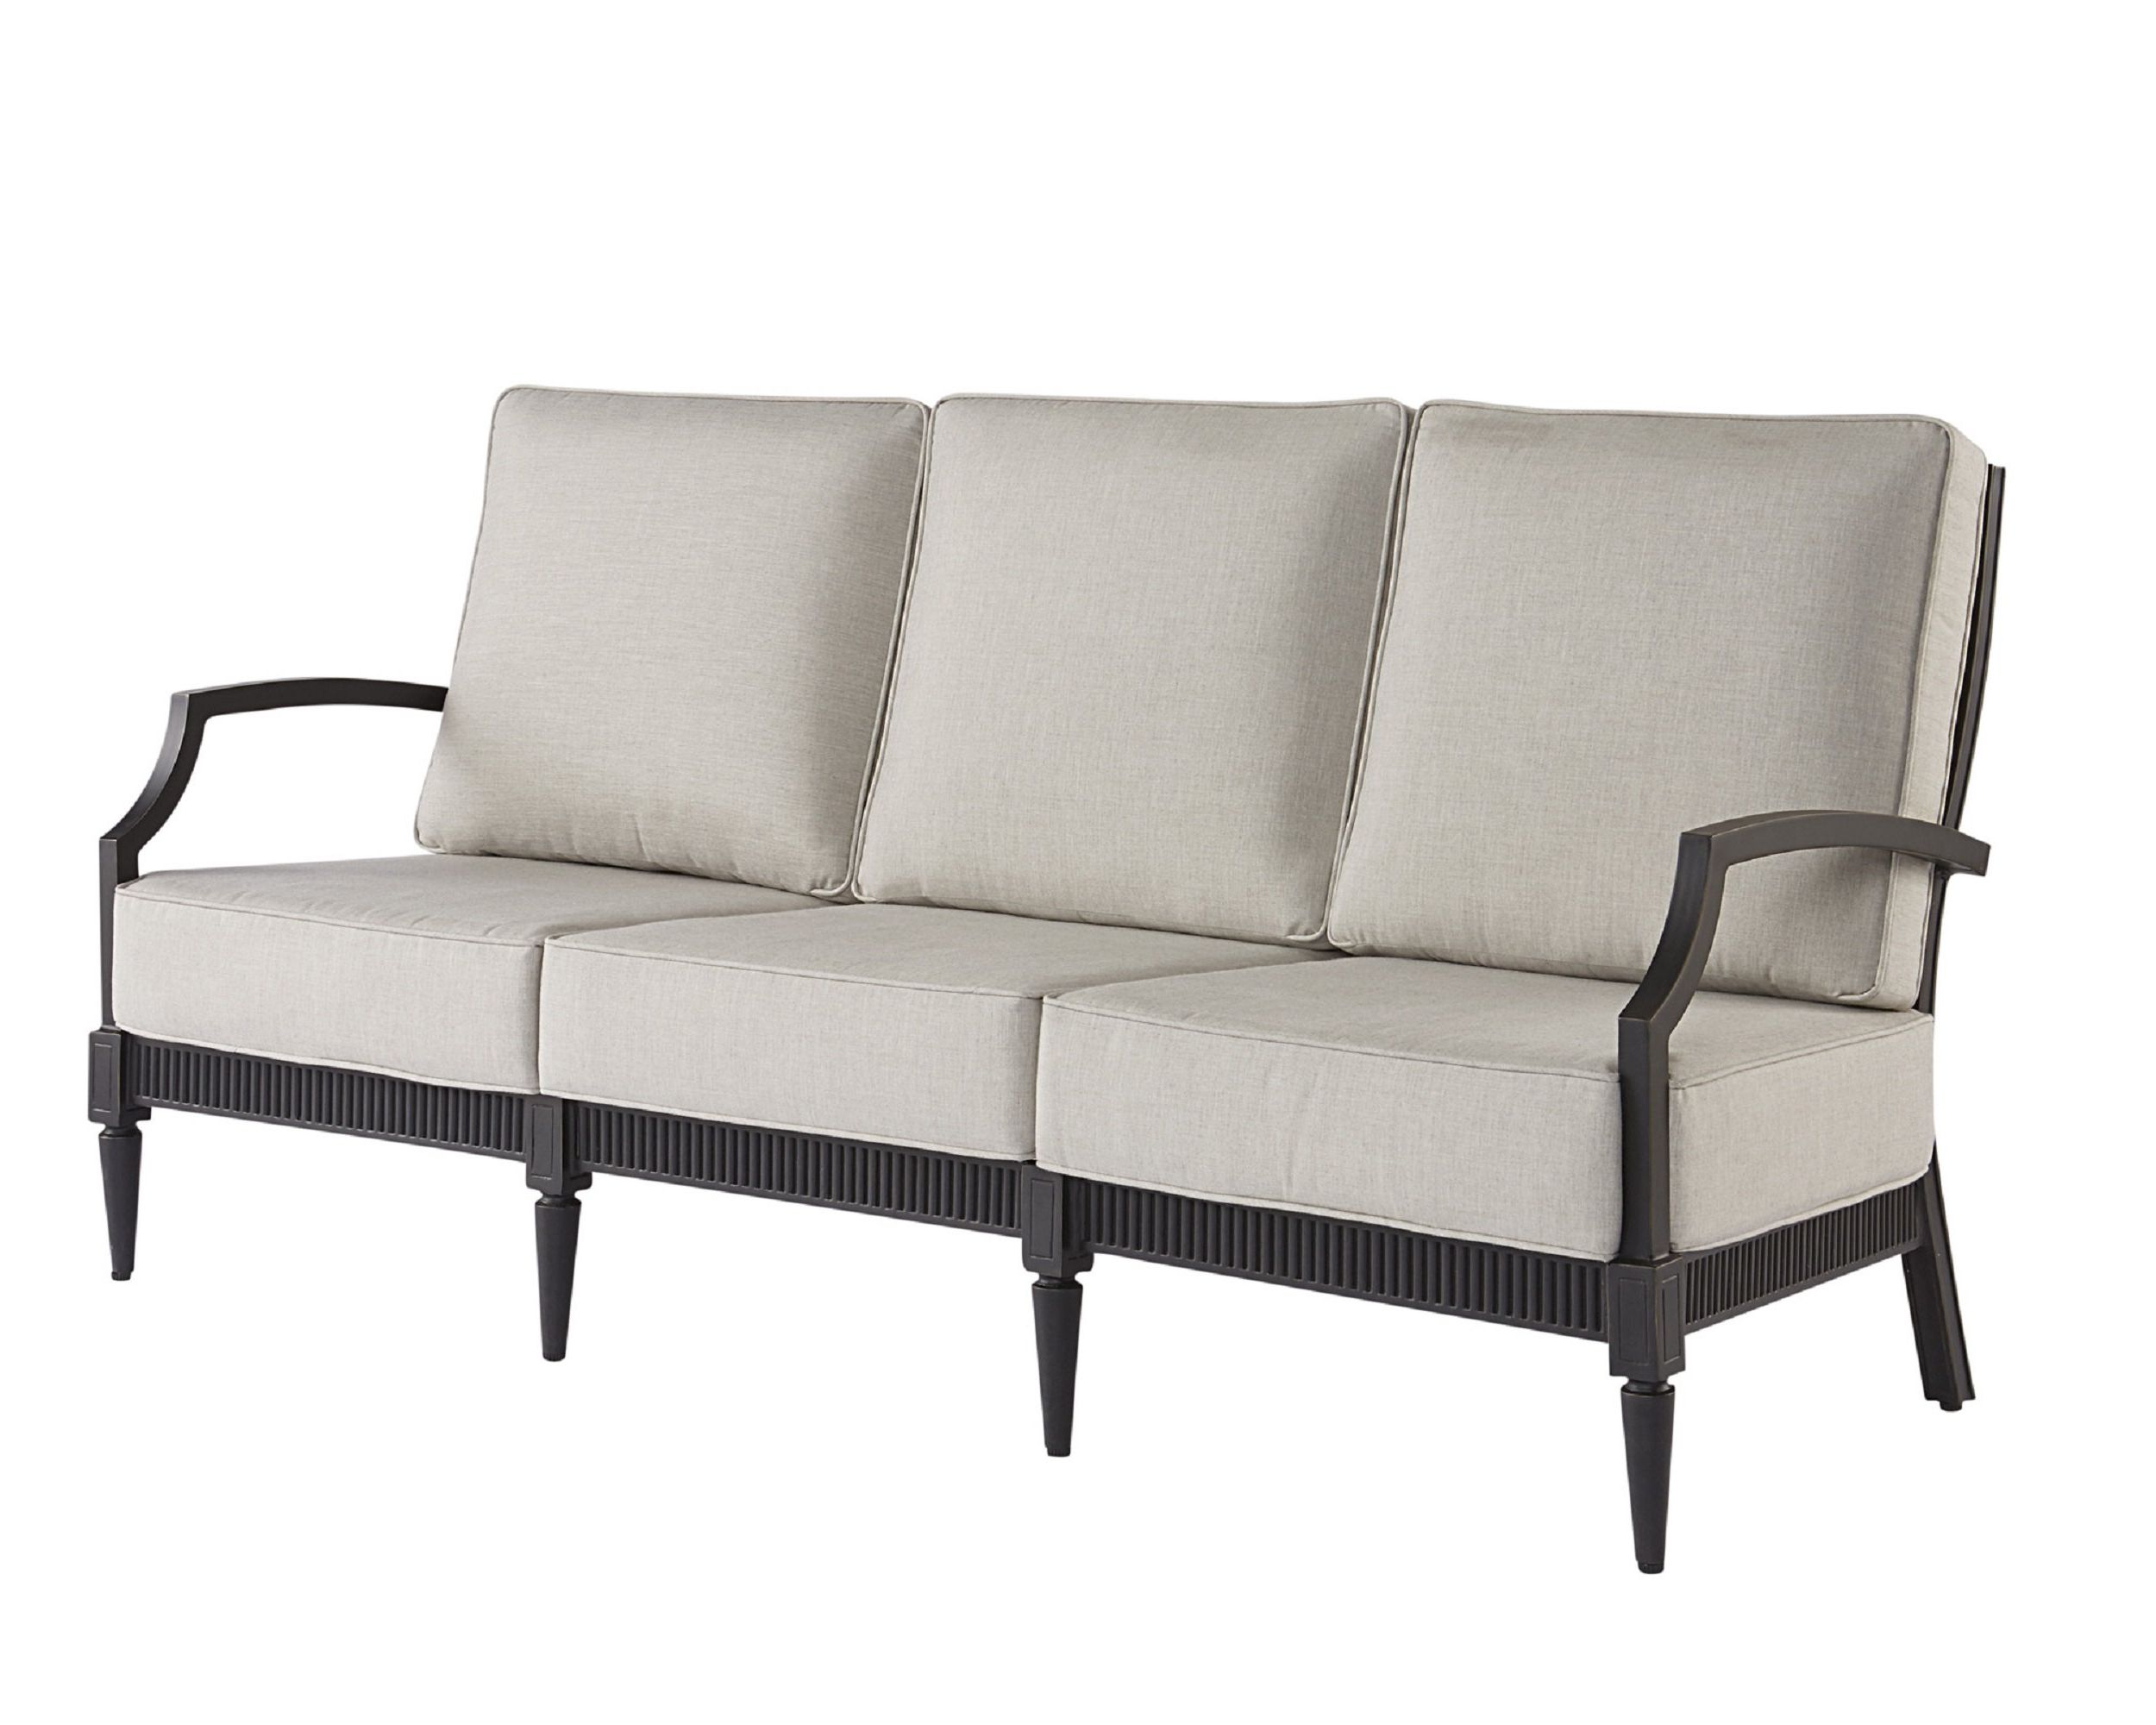 2020 Yoselin Patio Sofas With Cushions In Euston Patio Sofa With Cushions (Photo 16 of 20)